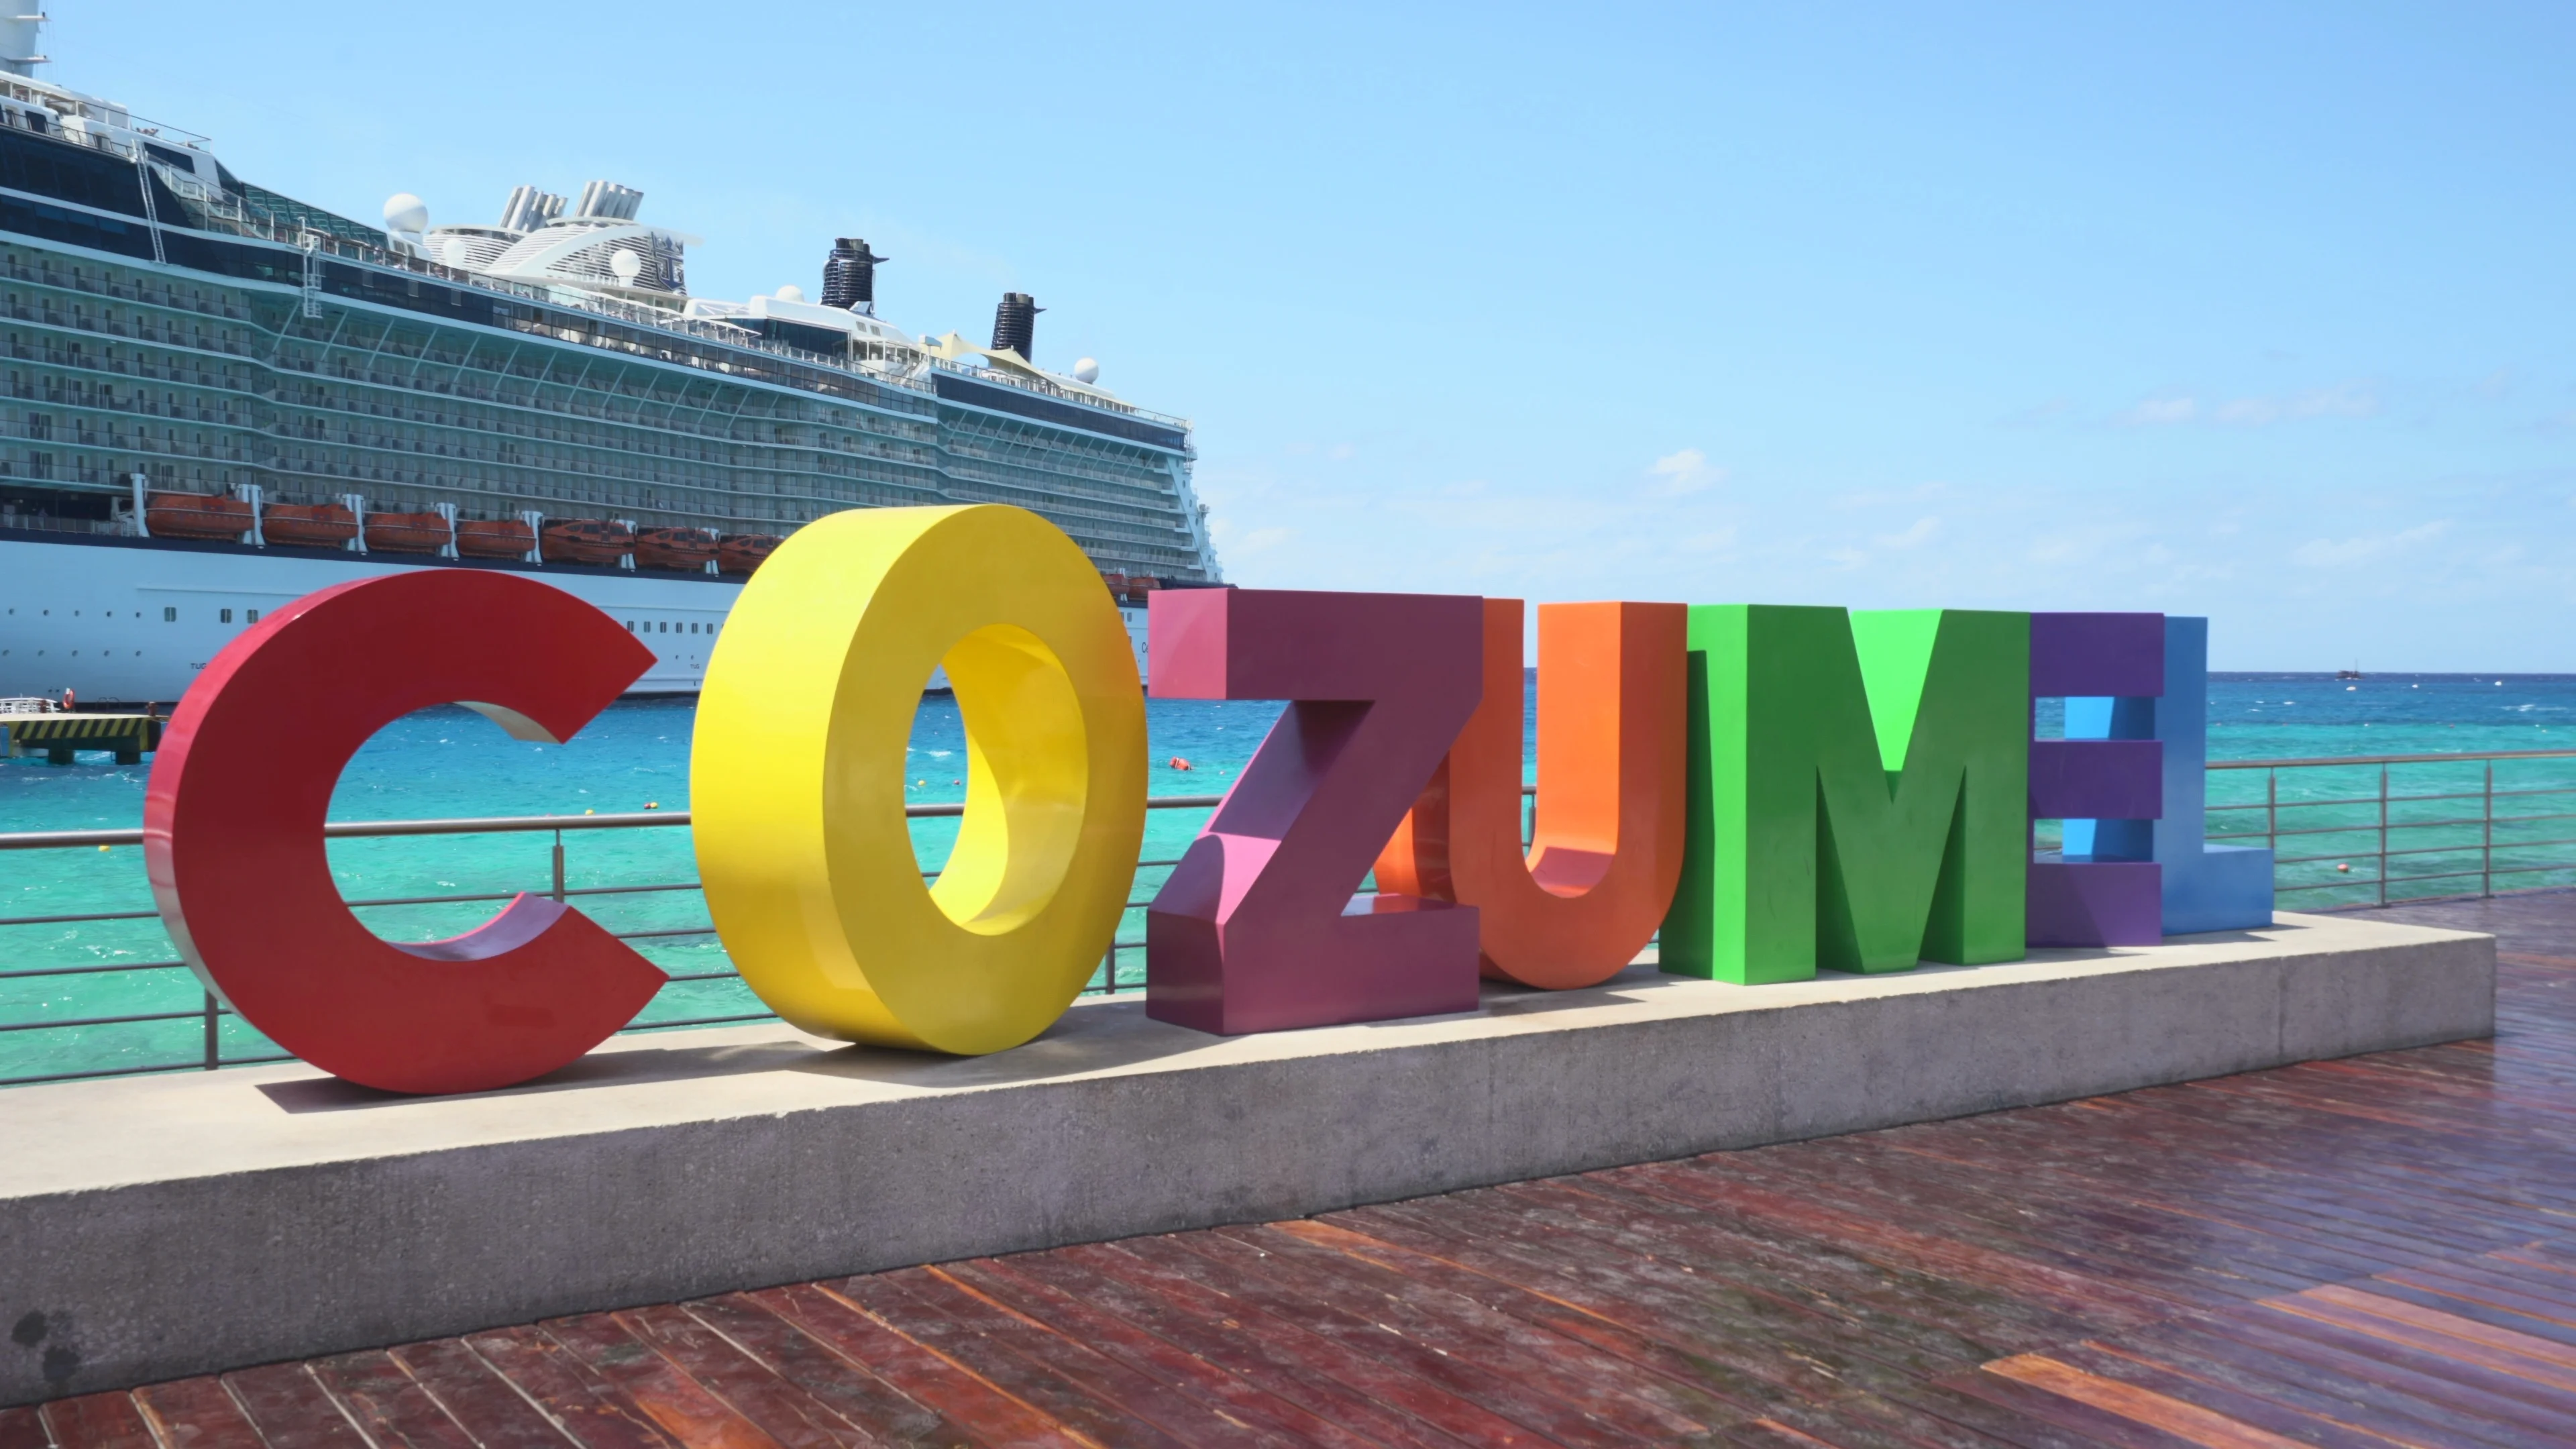 Cozumel Cruise Terminal Shopping Mall Me, Stock Video